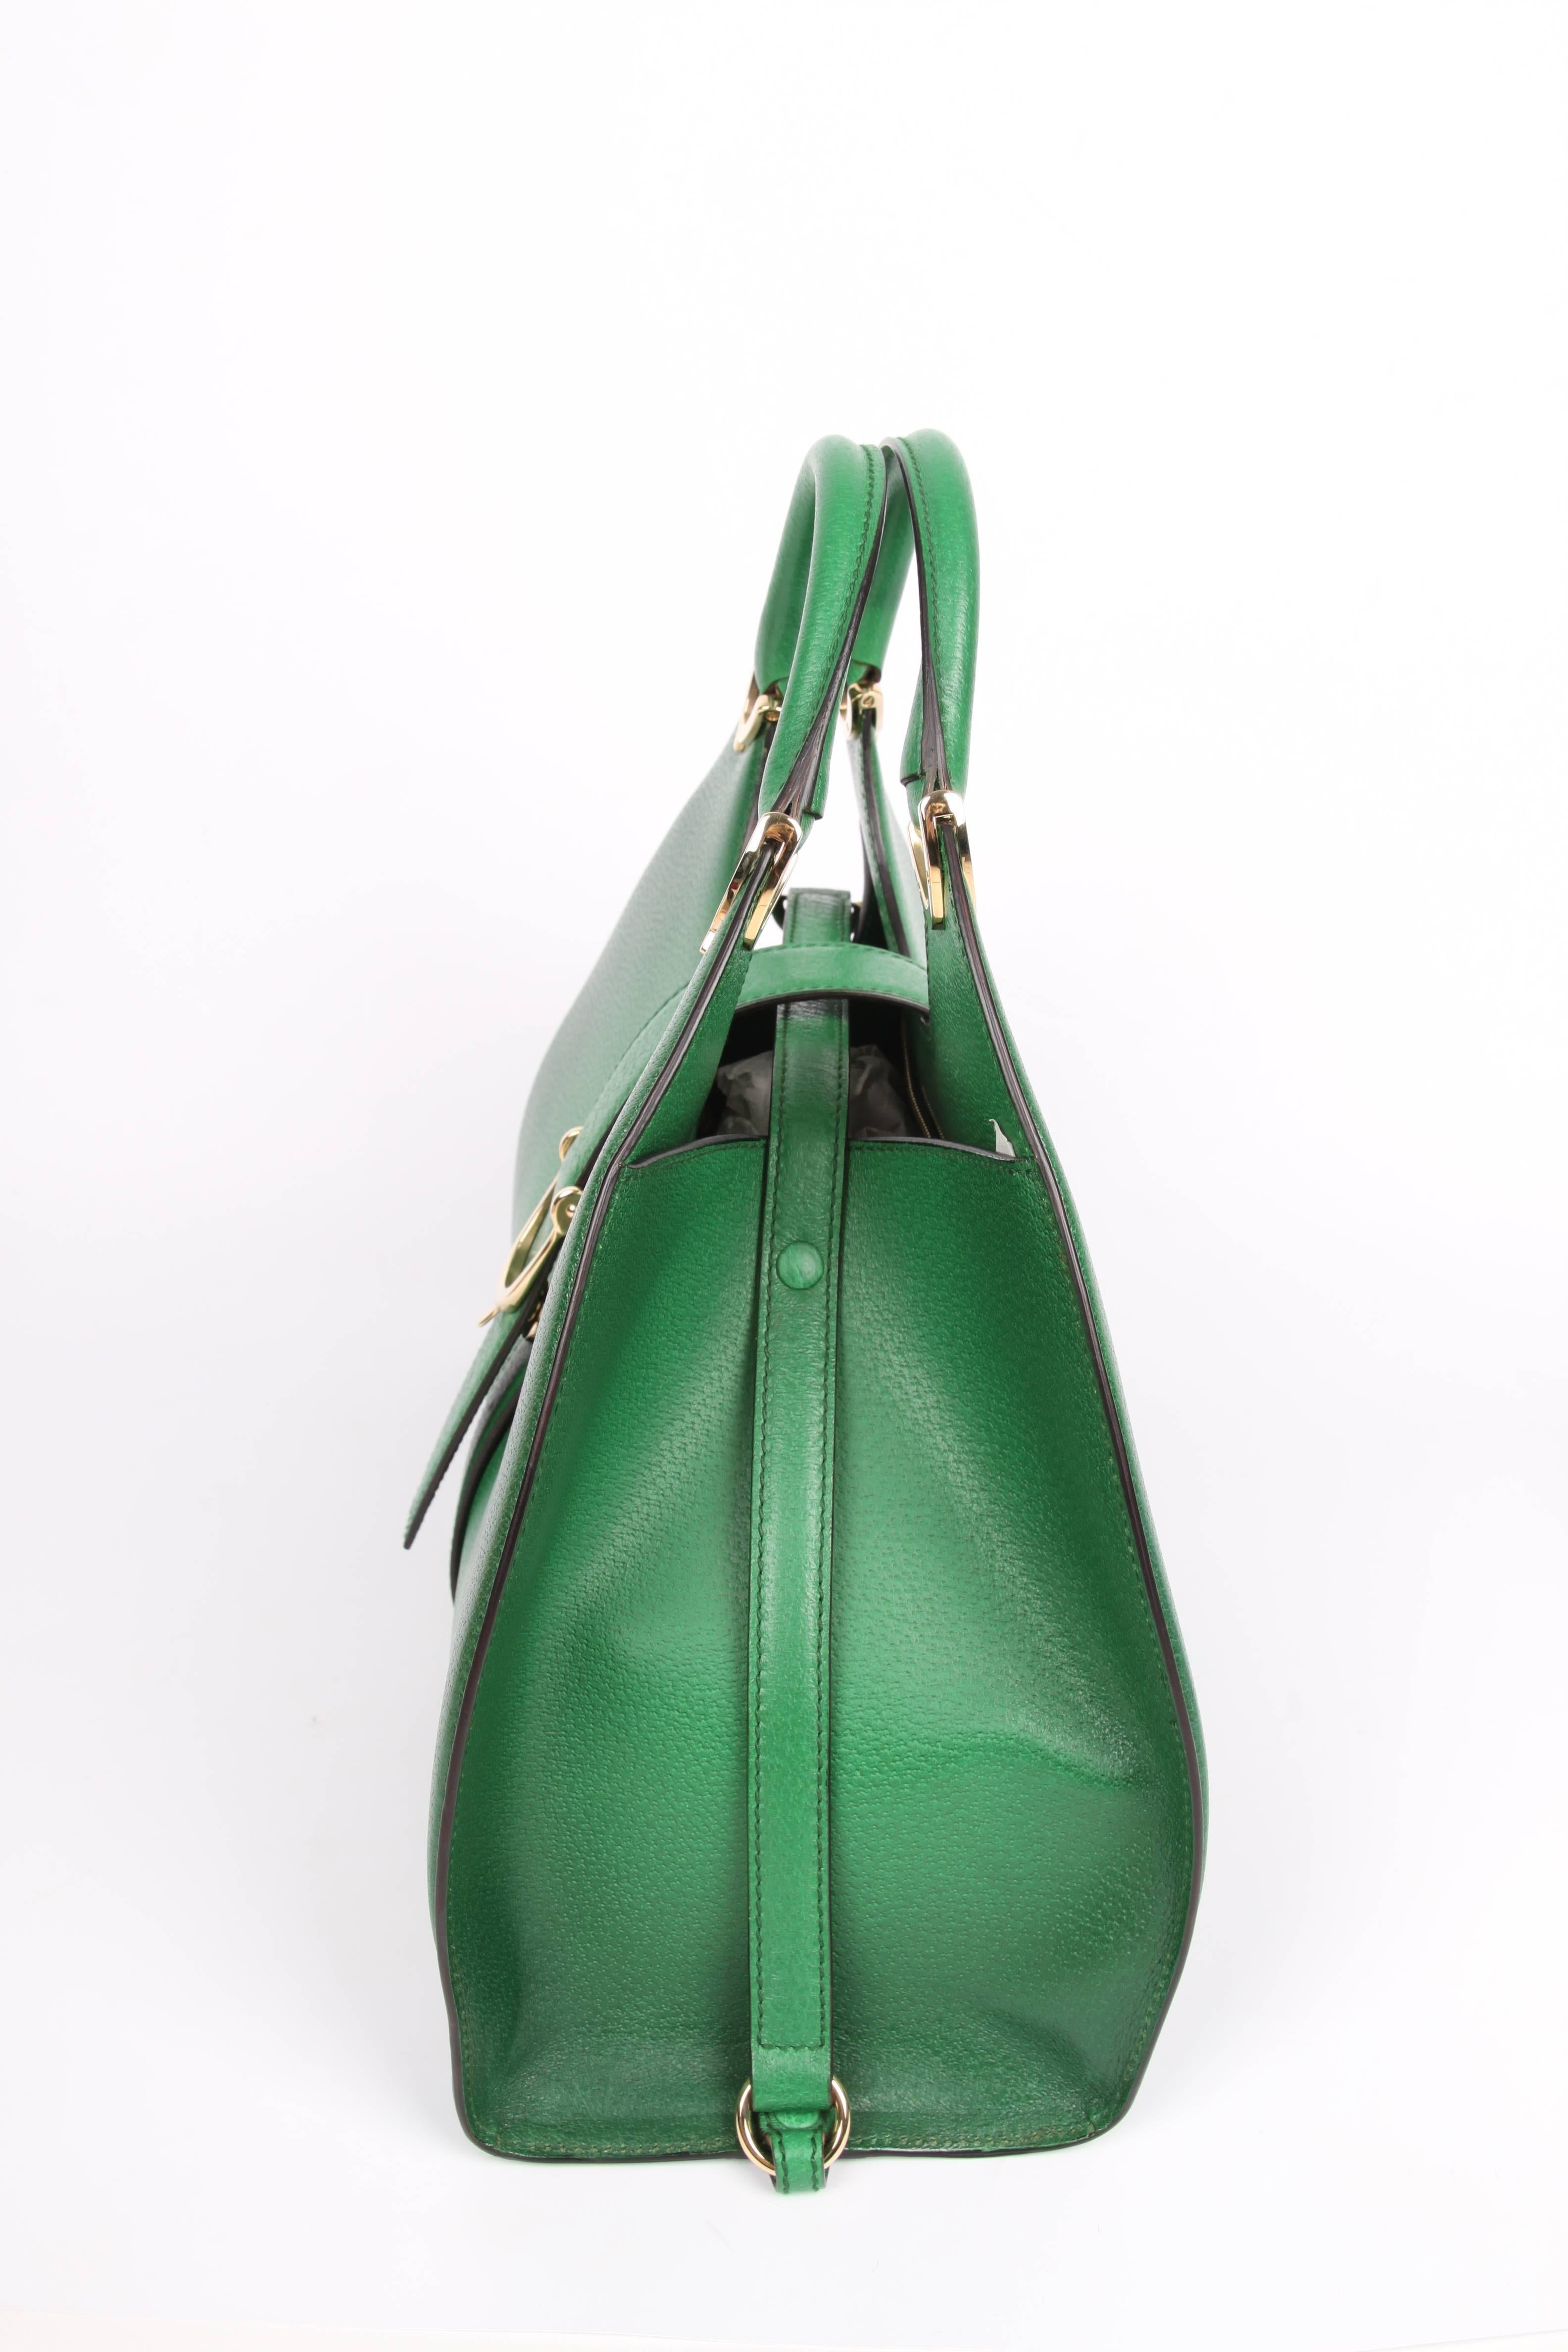 Green   Gucci Stirrup Top Handle Bag - green   Gucci Stirrup Top Handle Bag - green   